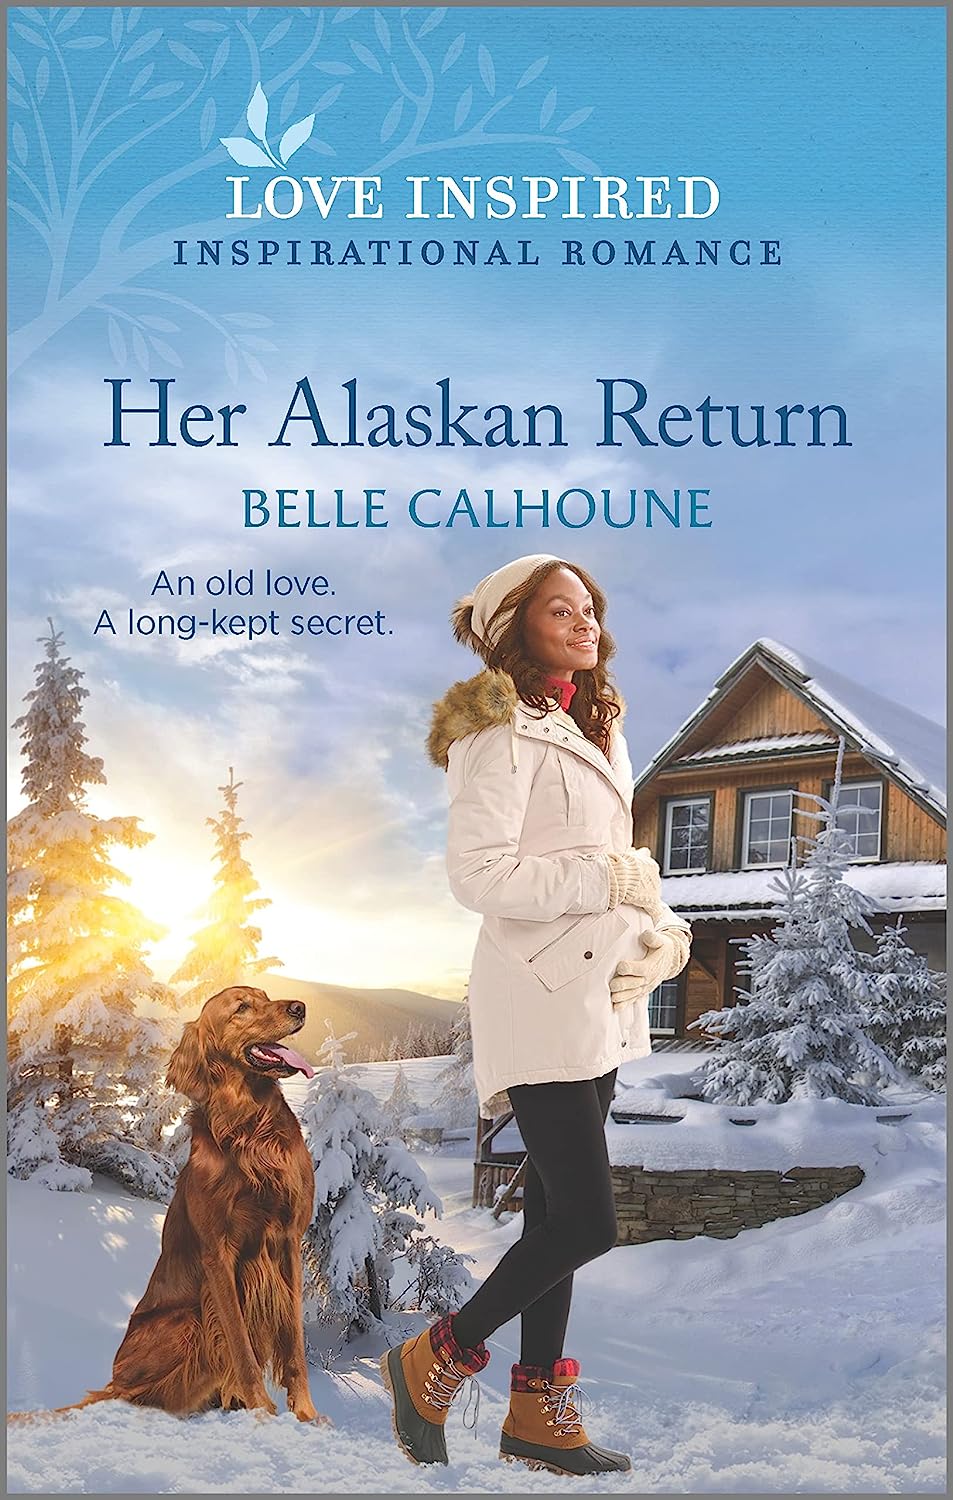 Image for "Her Alaskan Return: An Uplifting Inspirational Romance"